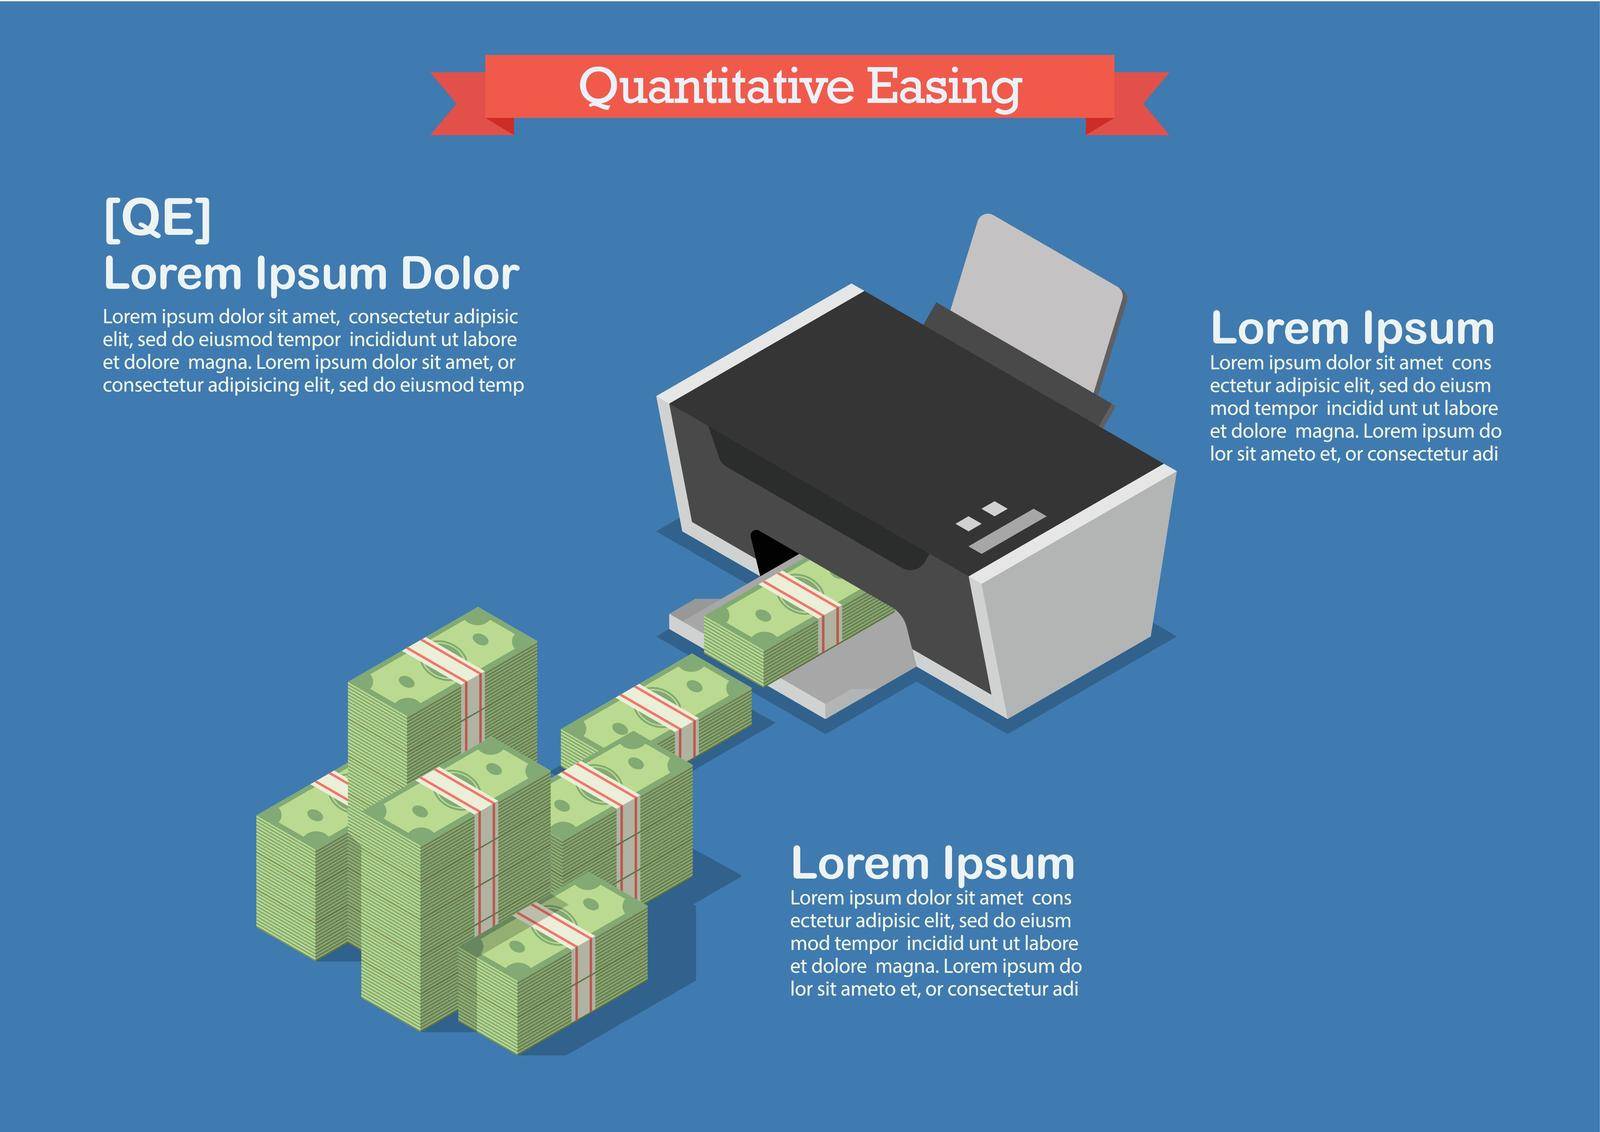 Quantitative easing. Printing money business concept